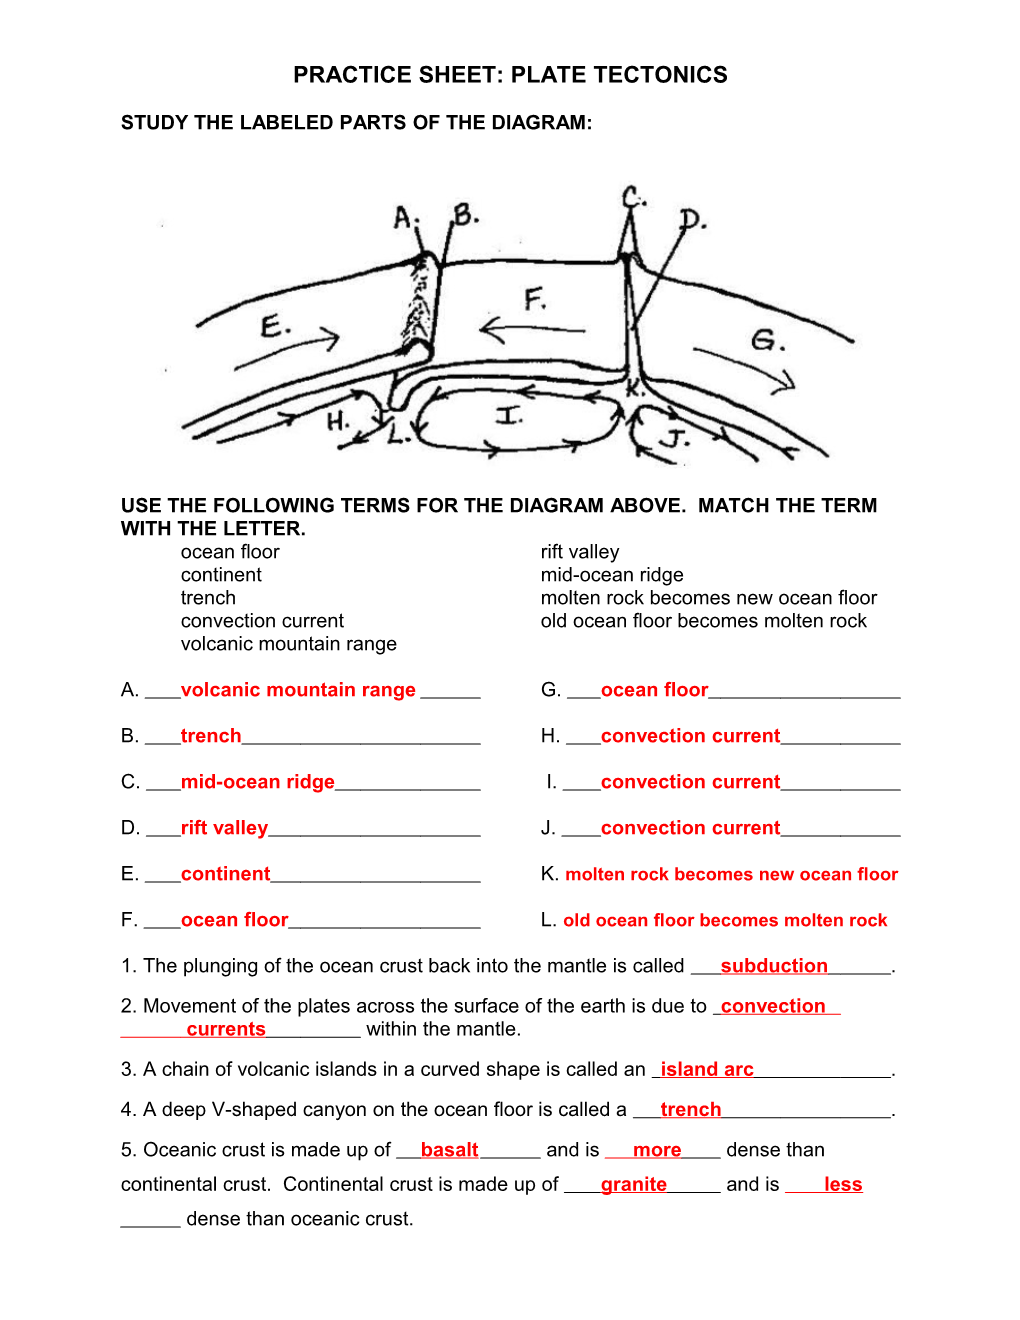 Practice Sheet: Plate Tectonics